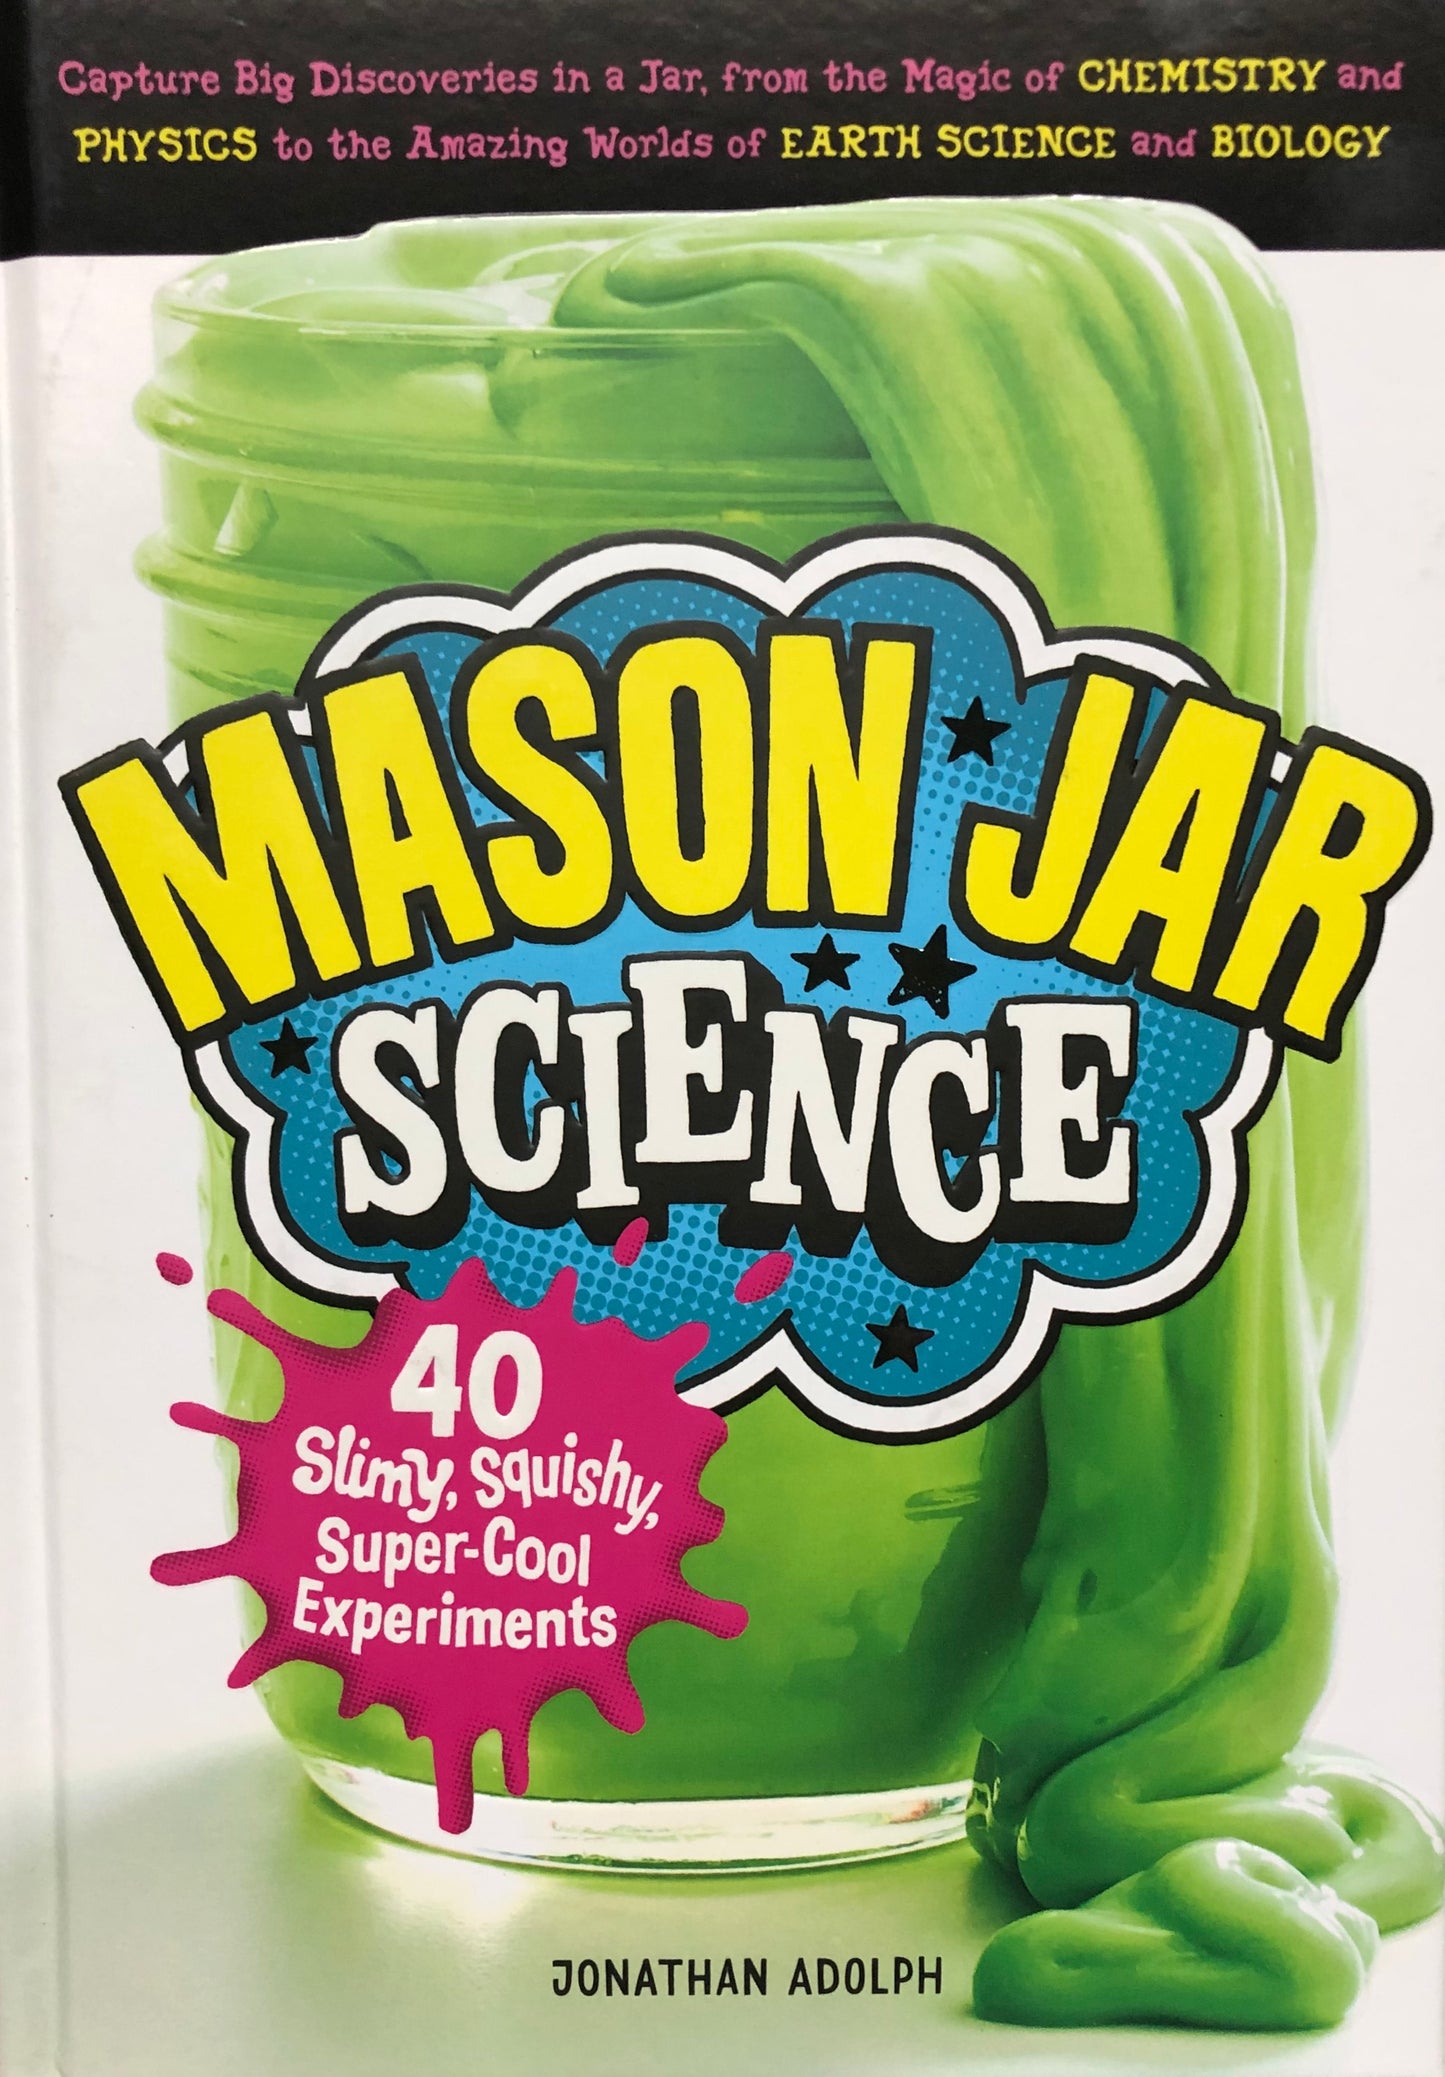 S - Book: Mason Jar Science